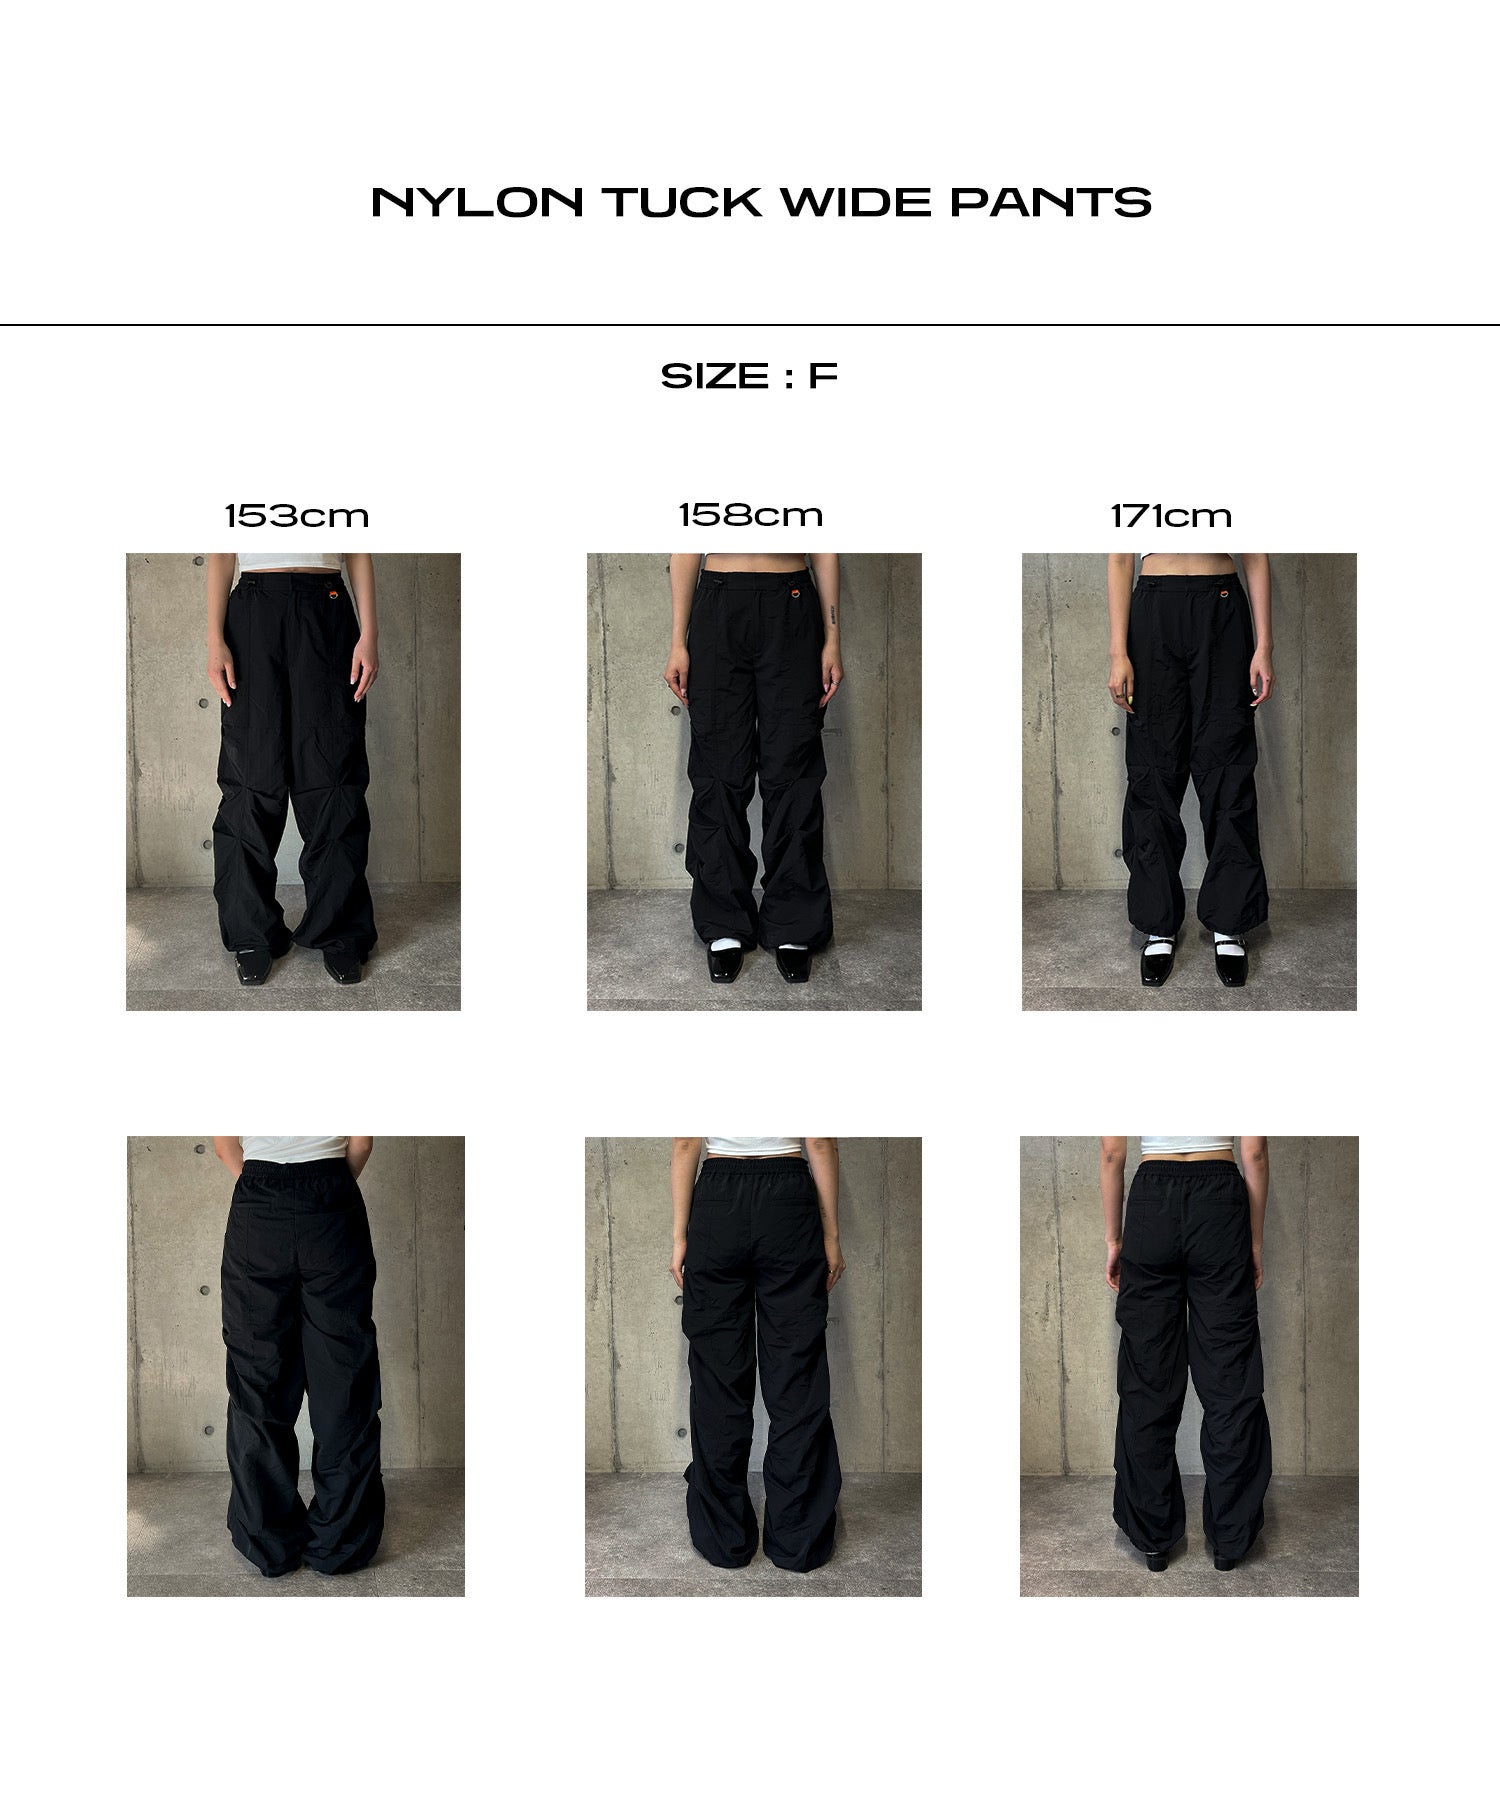 Nylon tuck wide pants